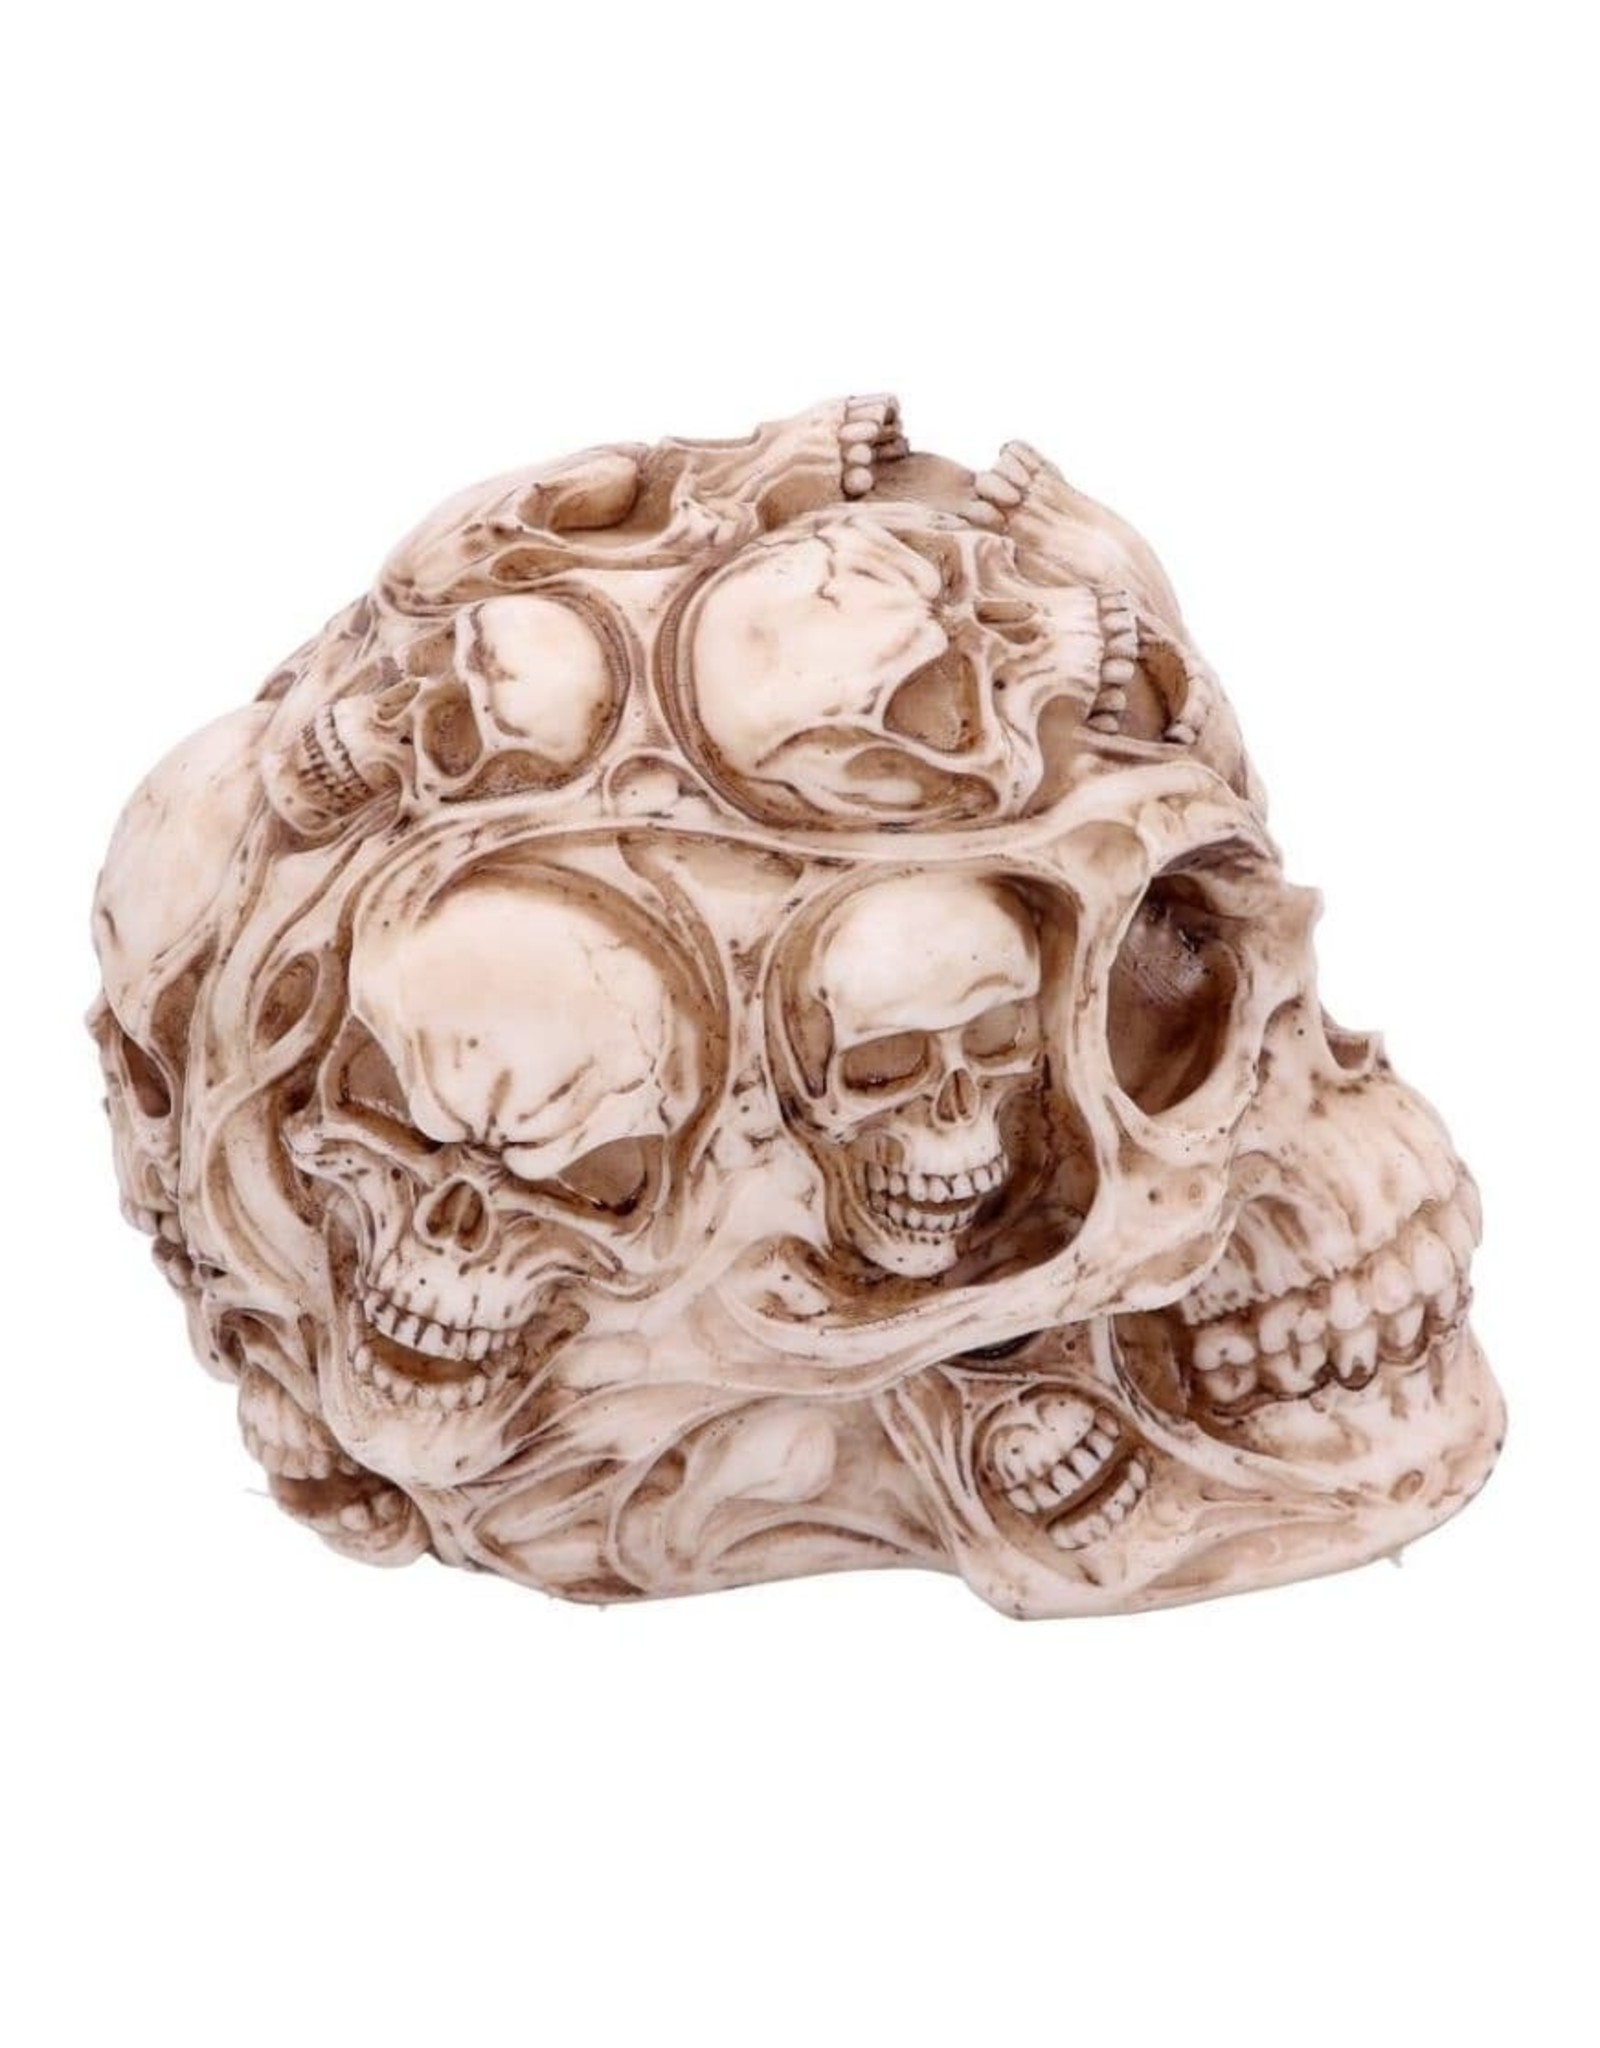 James Ryman Skulls - Skull of Skulls skull of James Rayman  by Nemesis Now